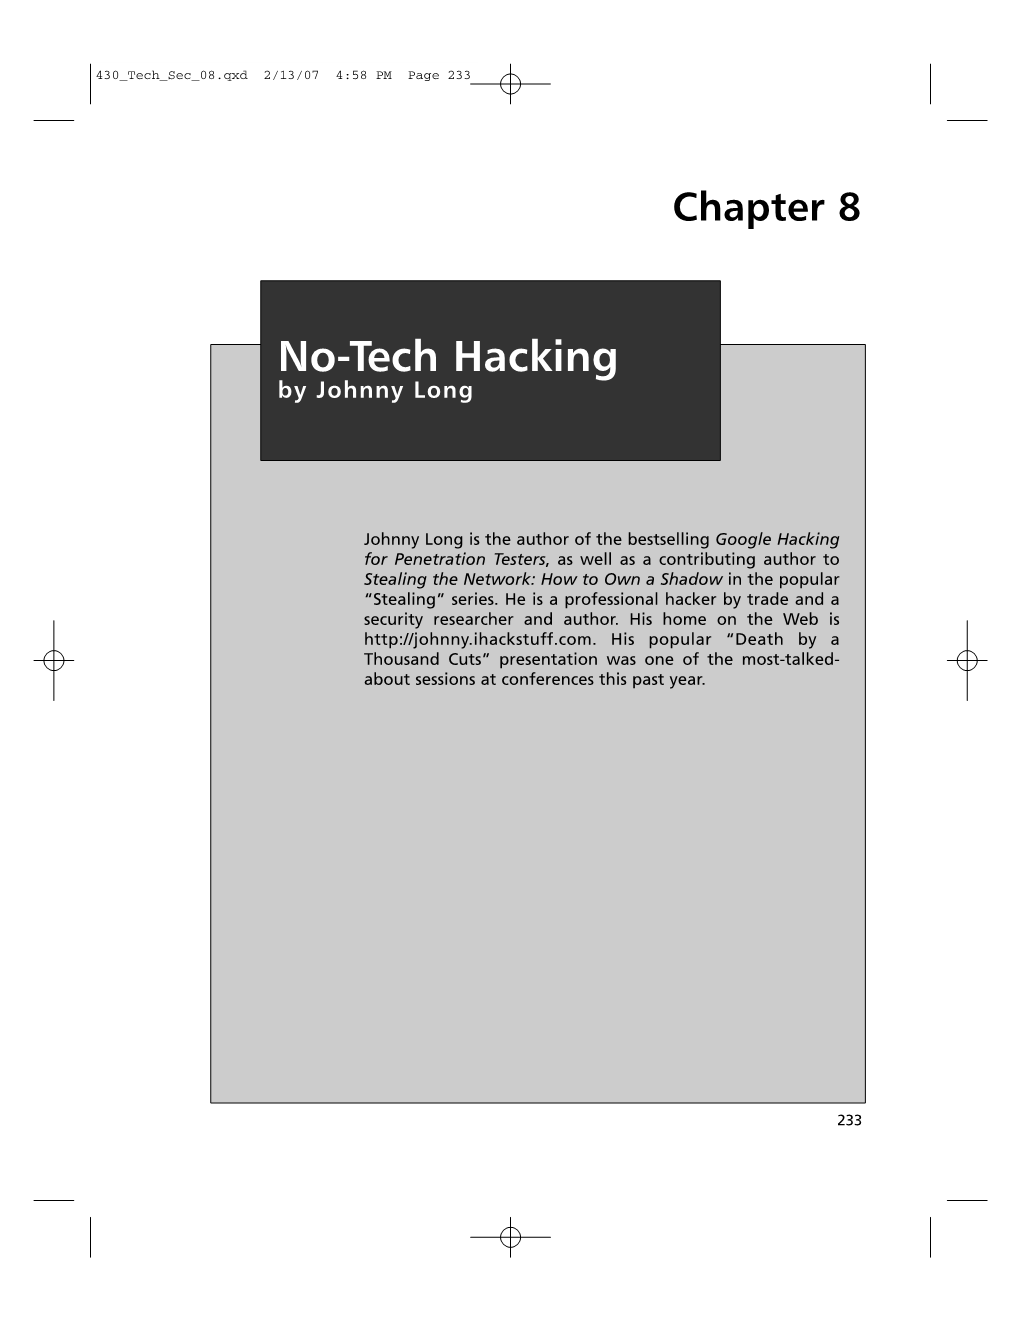 No-Tech Hacking by Johnny Long